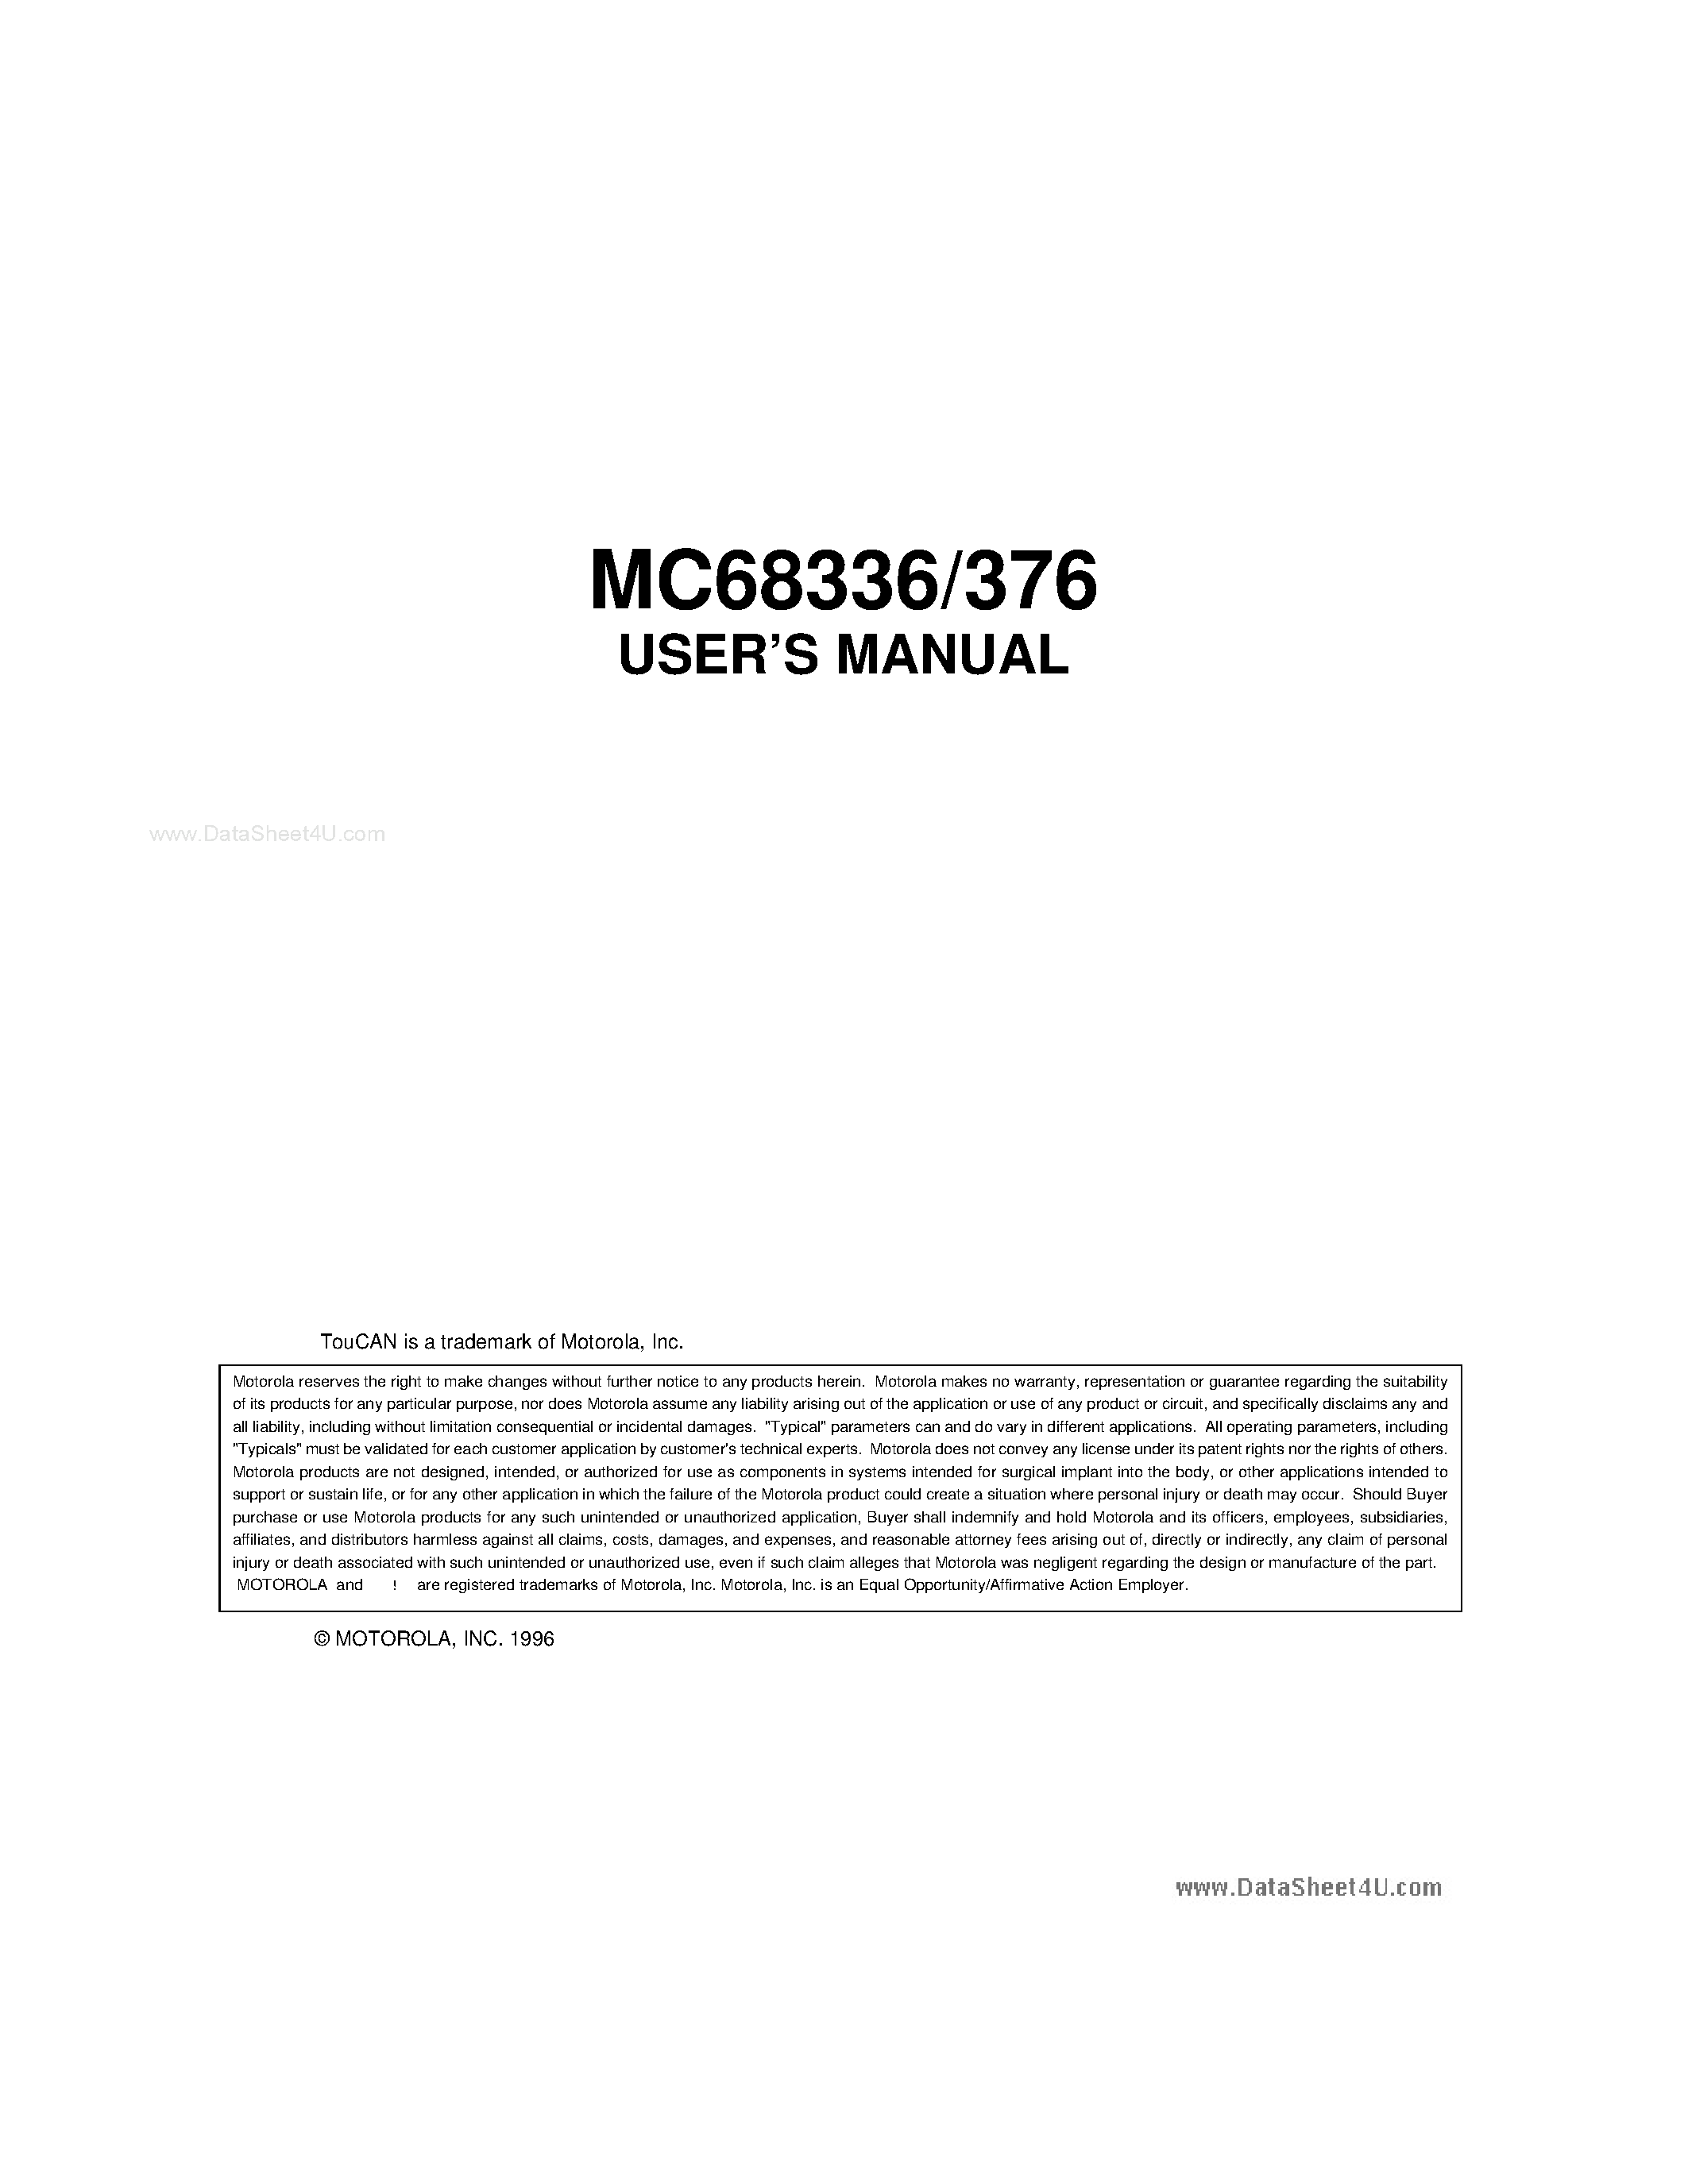 Datasheet MC68336 - (MC68336 / MC68376) User Manual page 1